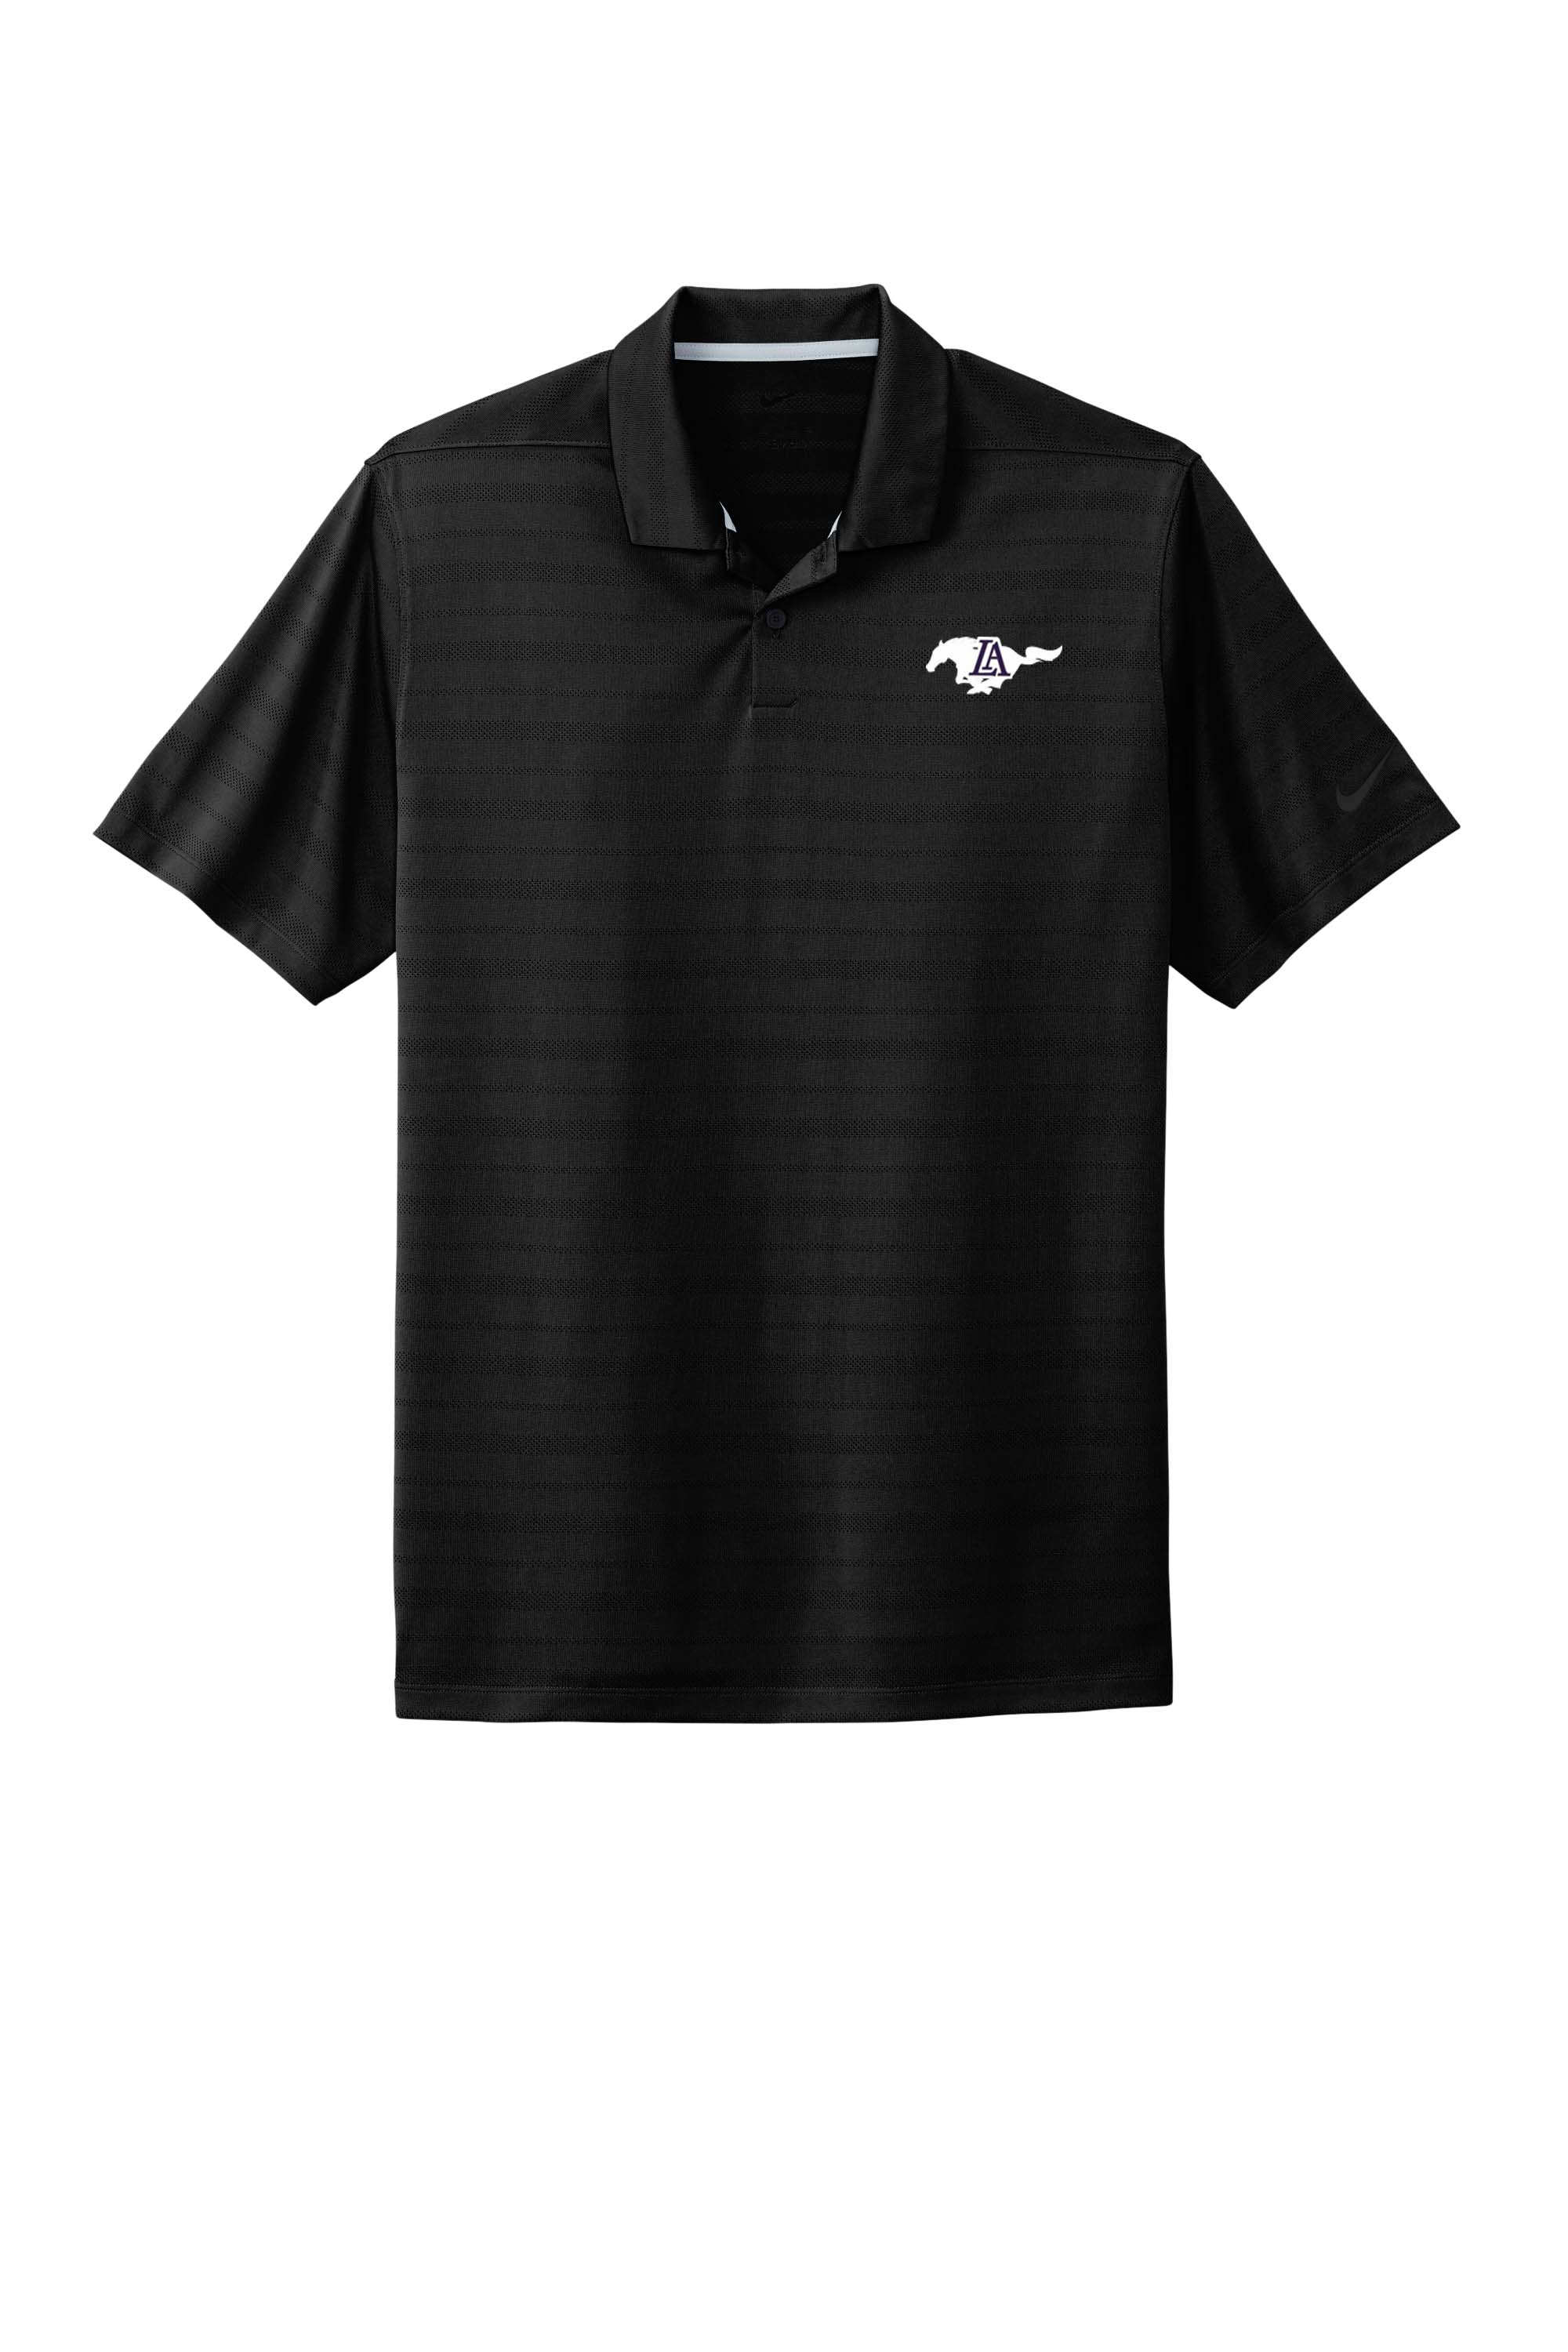 Nike - Dri-Fit Black on Black Stripe Polo